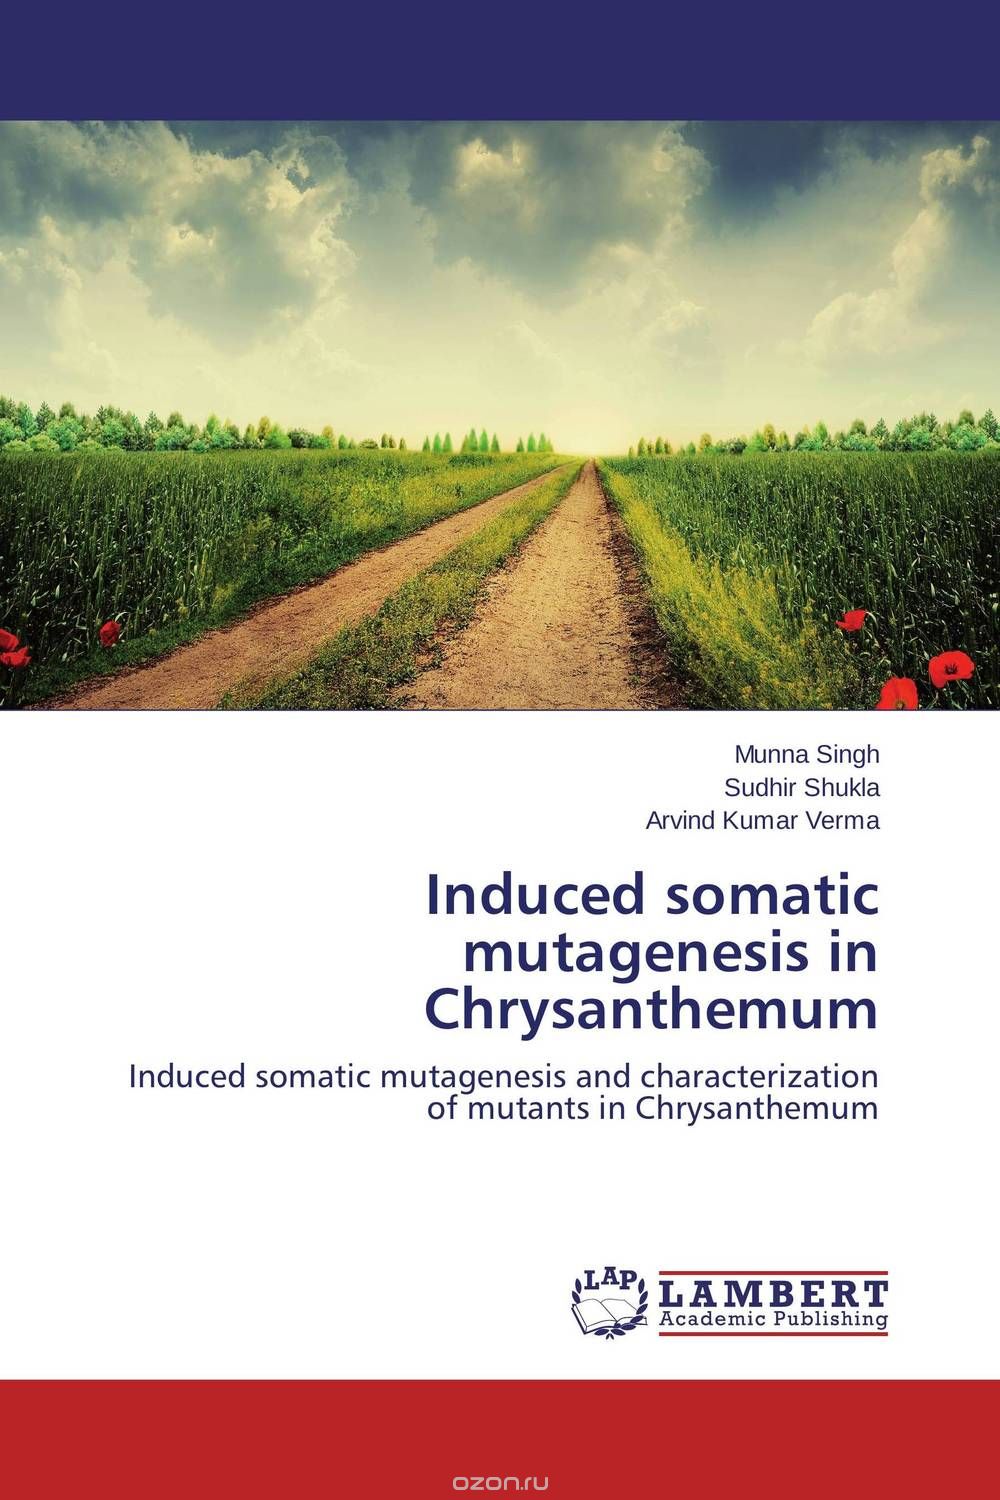 Induced somatic mutagenesis in Chrysanthemum